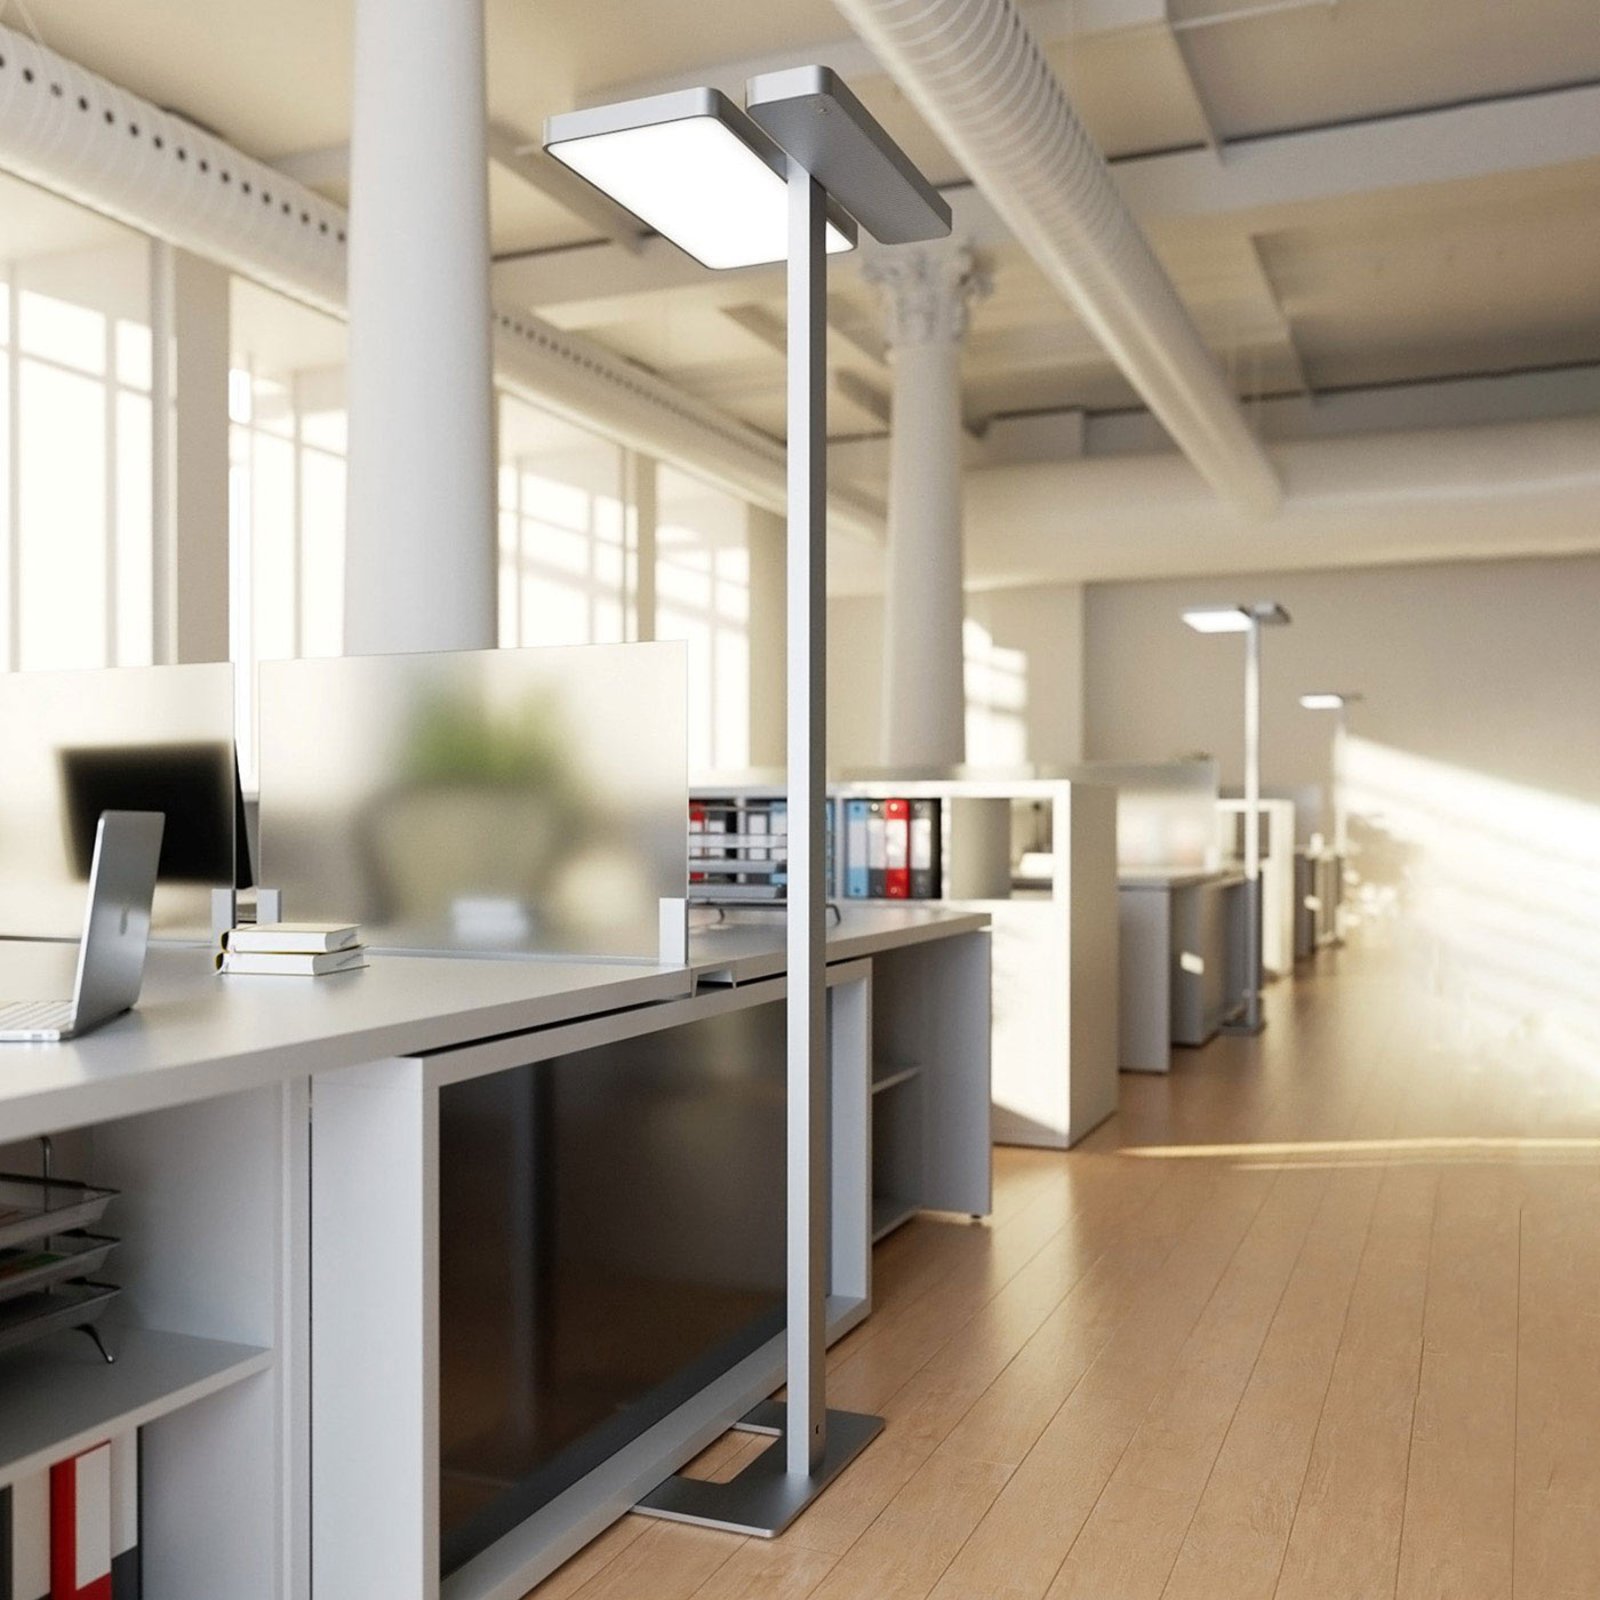 Office-LED-Stehlampe Aila, Tageslichtsensor